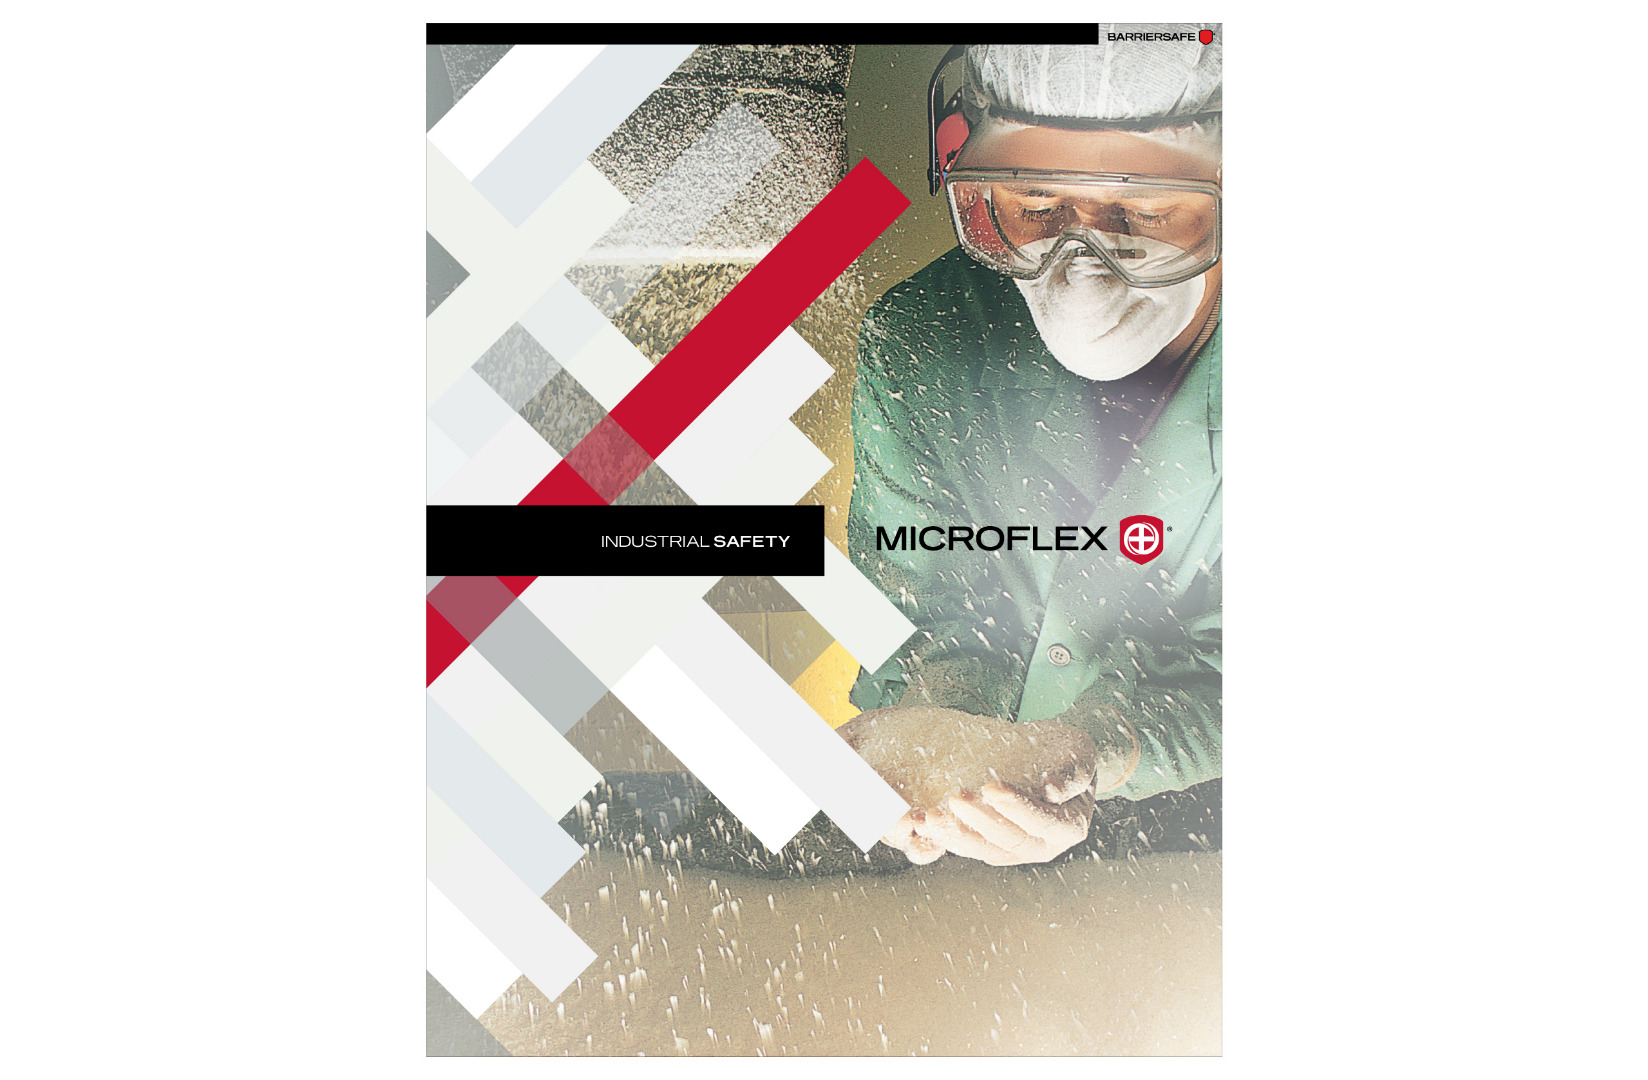 Microflex Industrial Safety Brochure